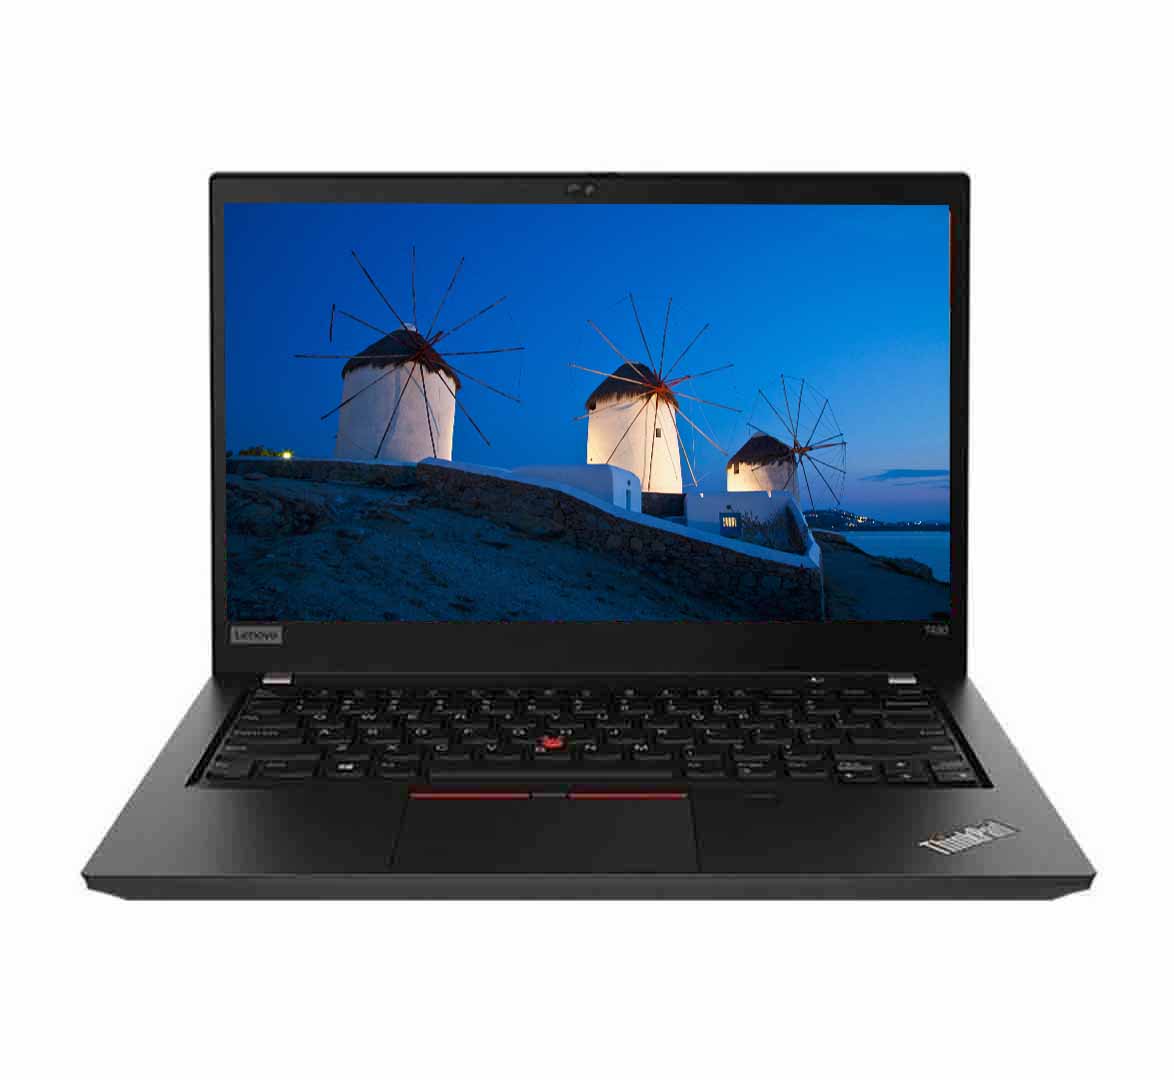 Lenovo ThinkPad T490 Core i7 8th Gen 8GB RAM 256GB SSD Laptop